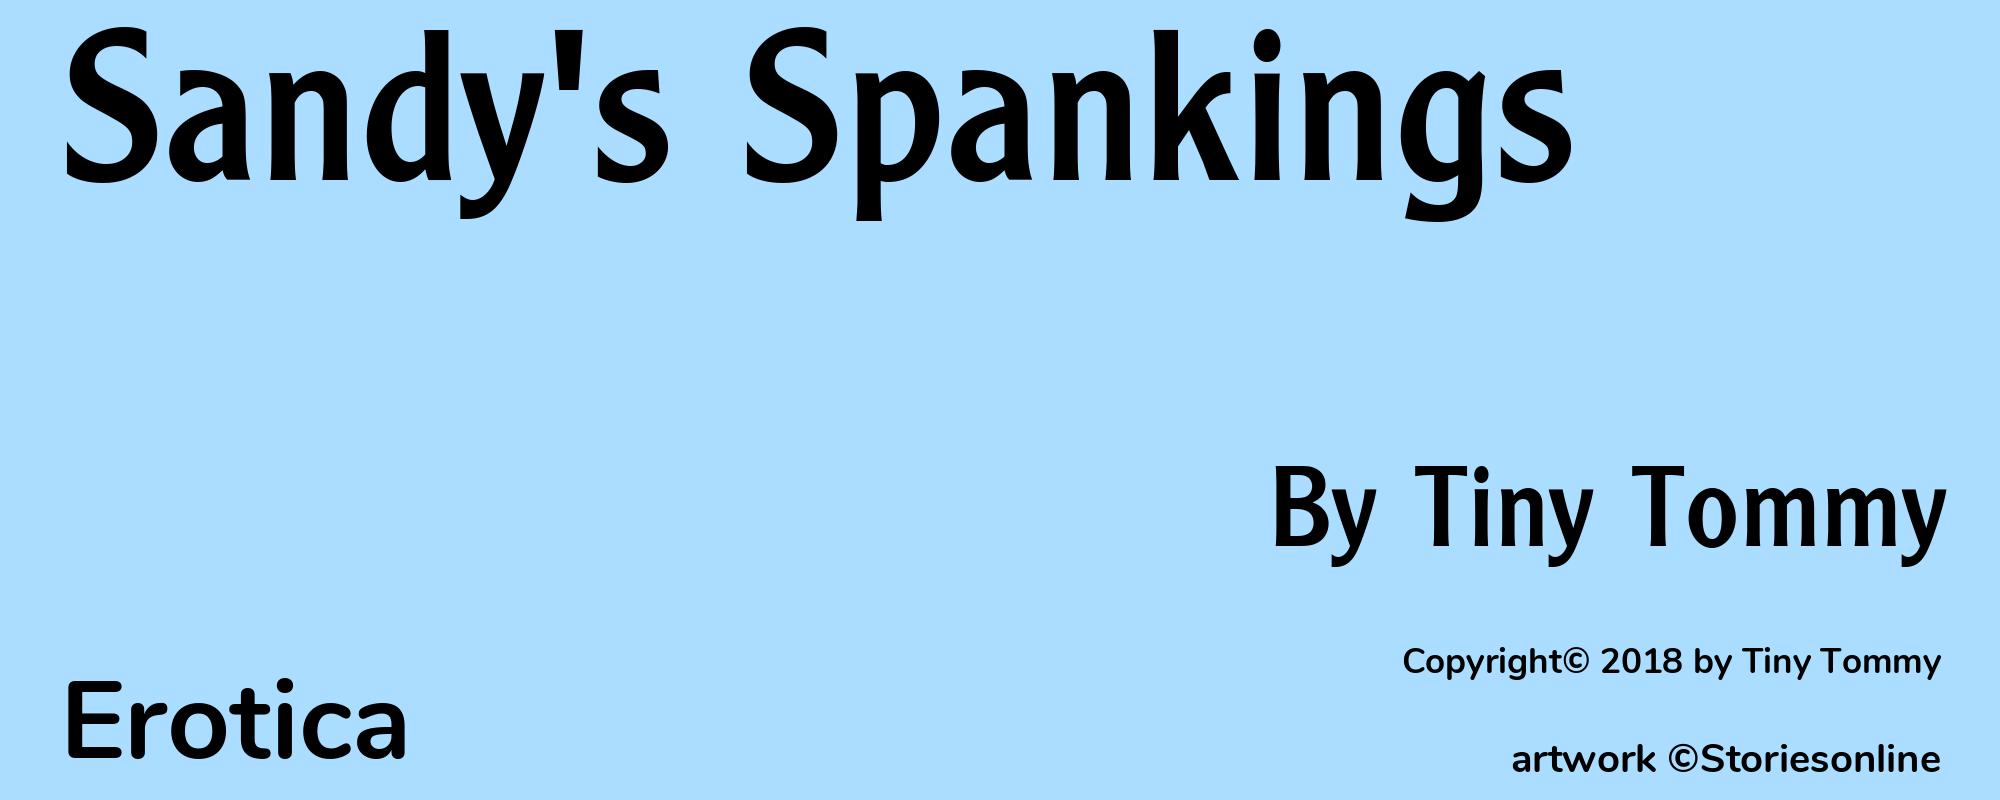 Sandy's Spankings - Cover